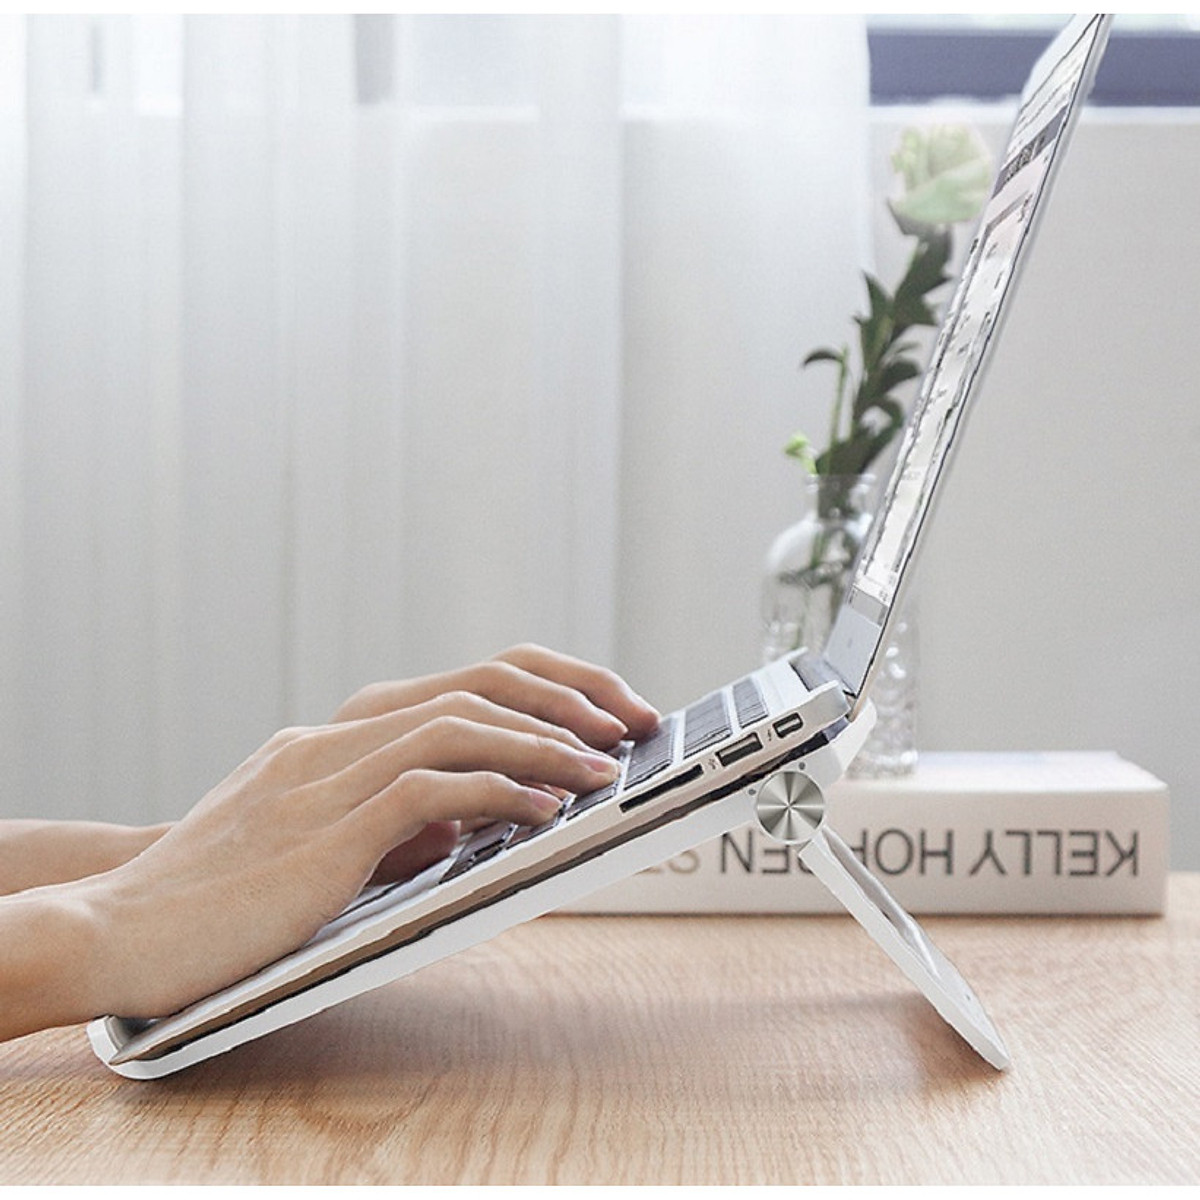 Gía Đỡ Tản Nhiệt  Hyperstand Folding Alumium For Macbook/Laptop/Ipad – HTU6